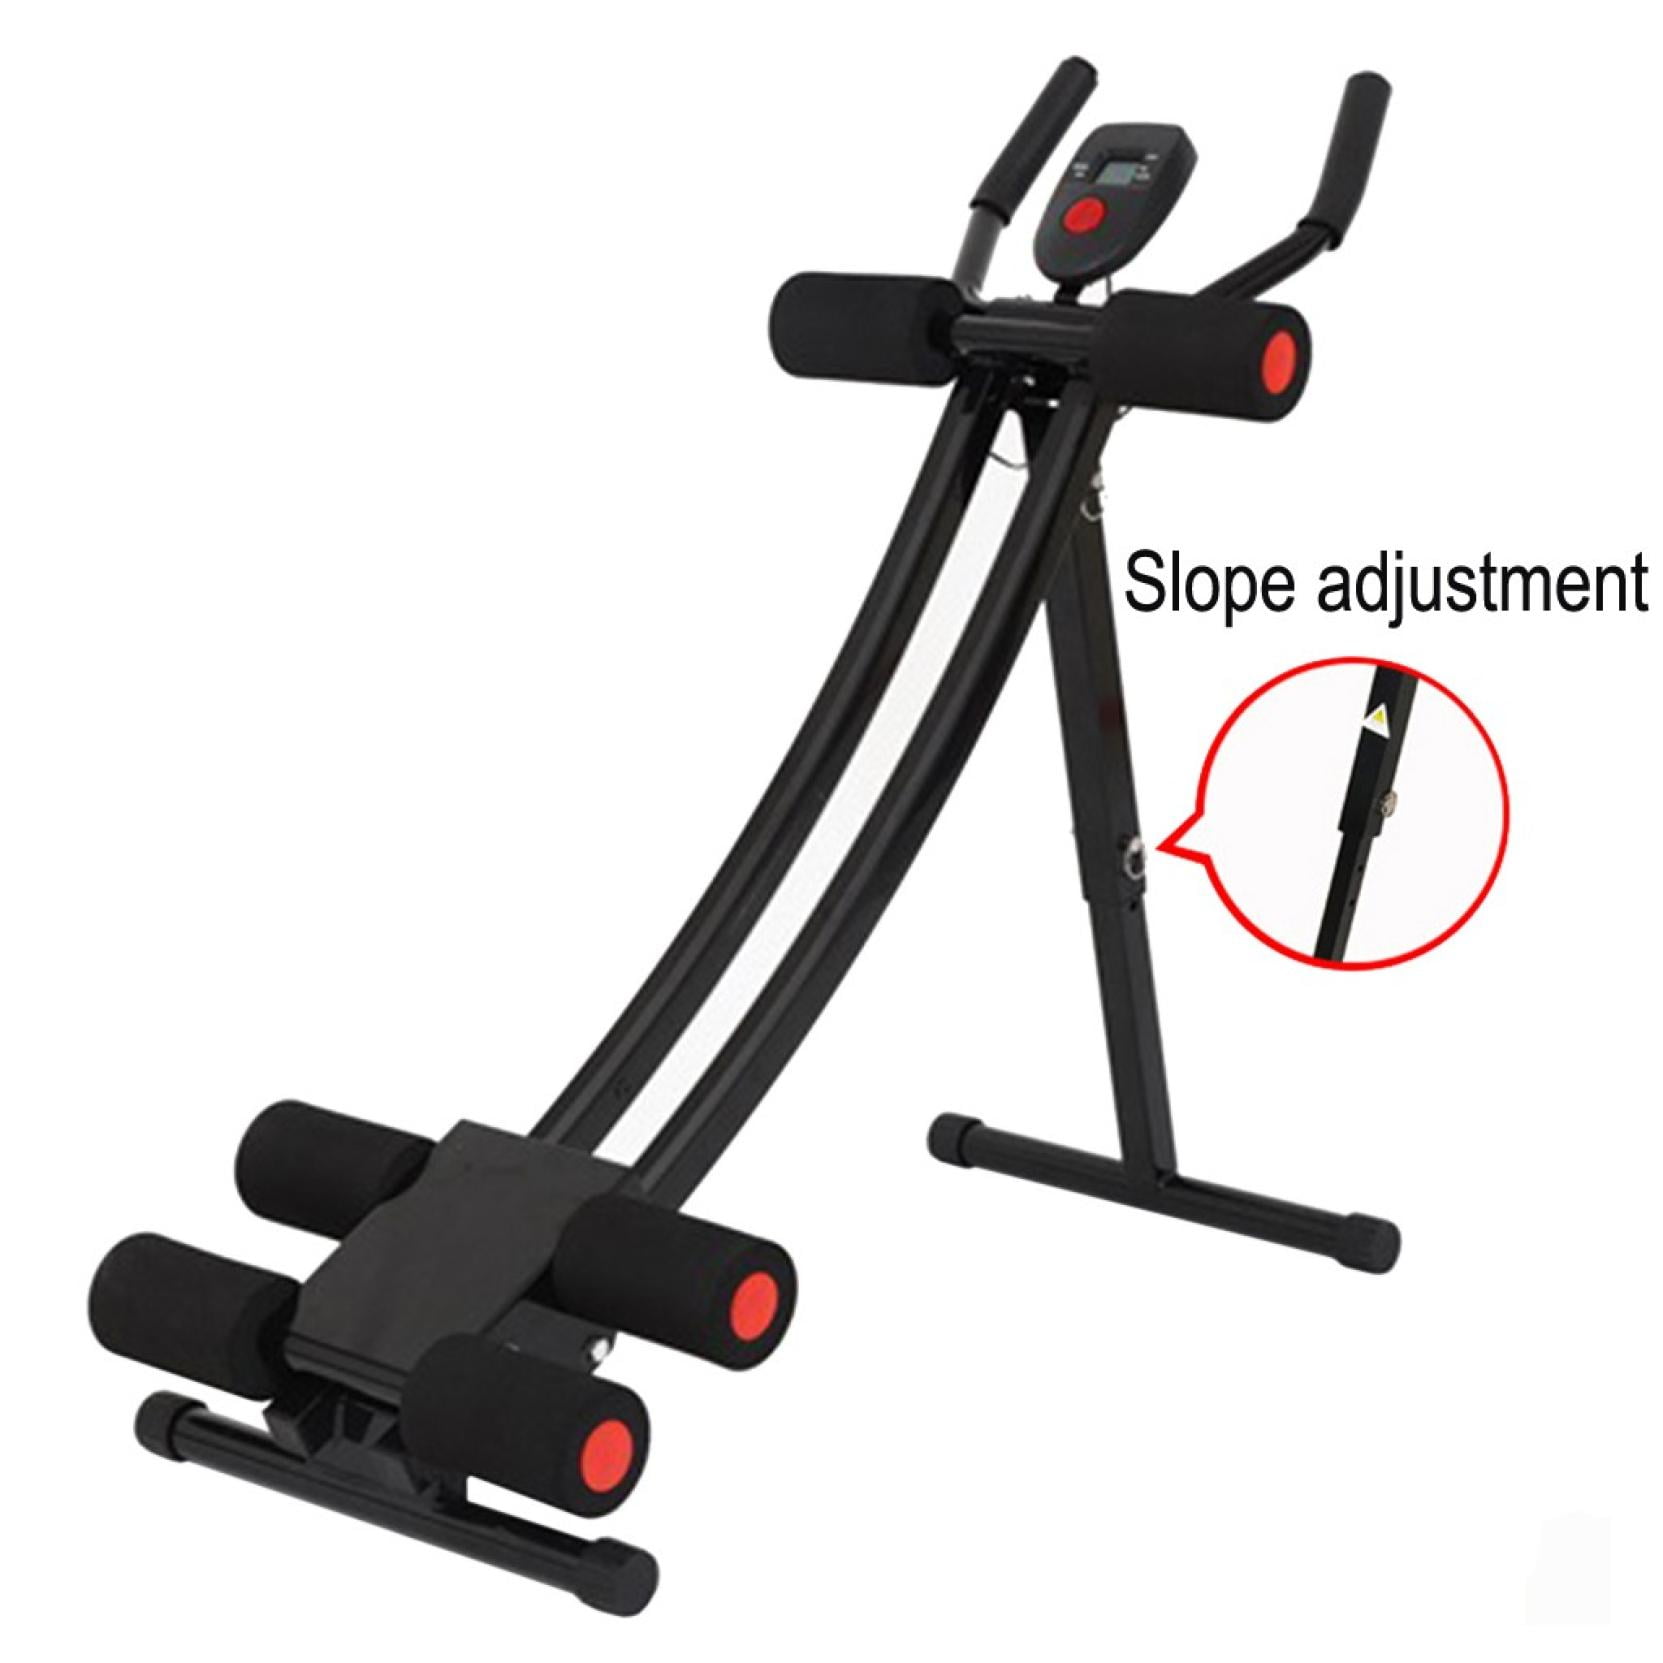 Nuevo fitness elastic SIT UP podadoras abdominales entrenador Home Sport equipment p c5t 